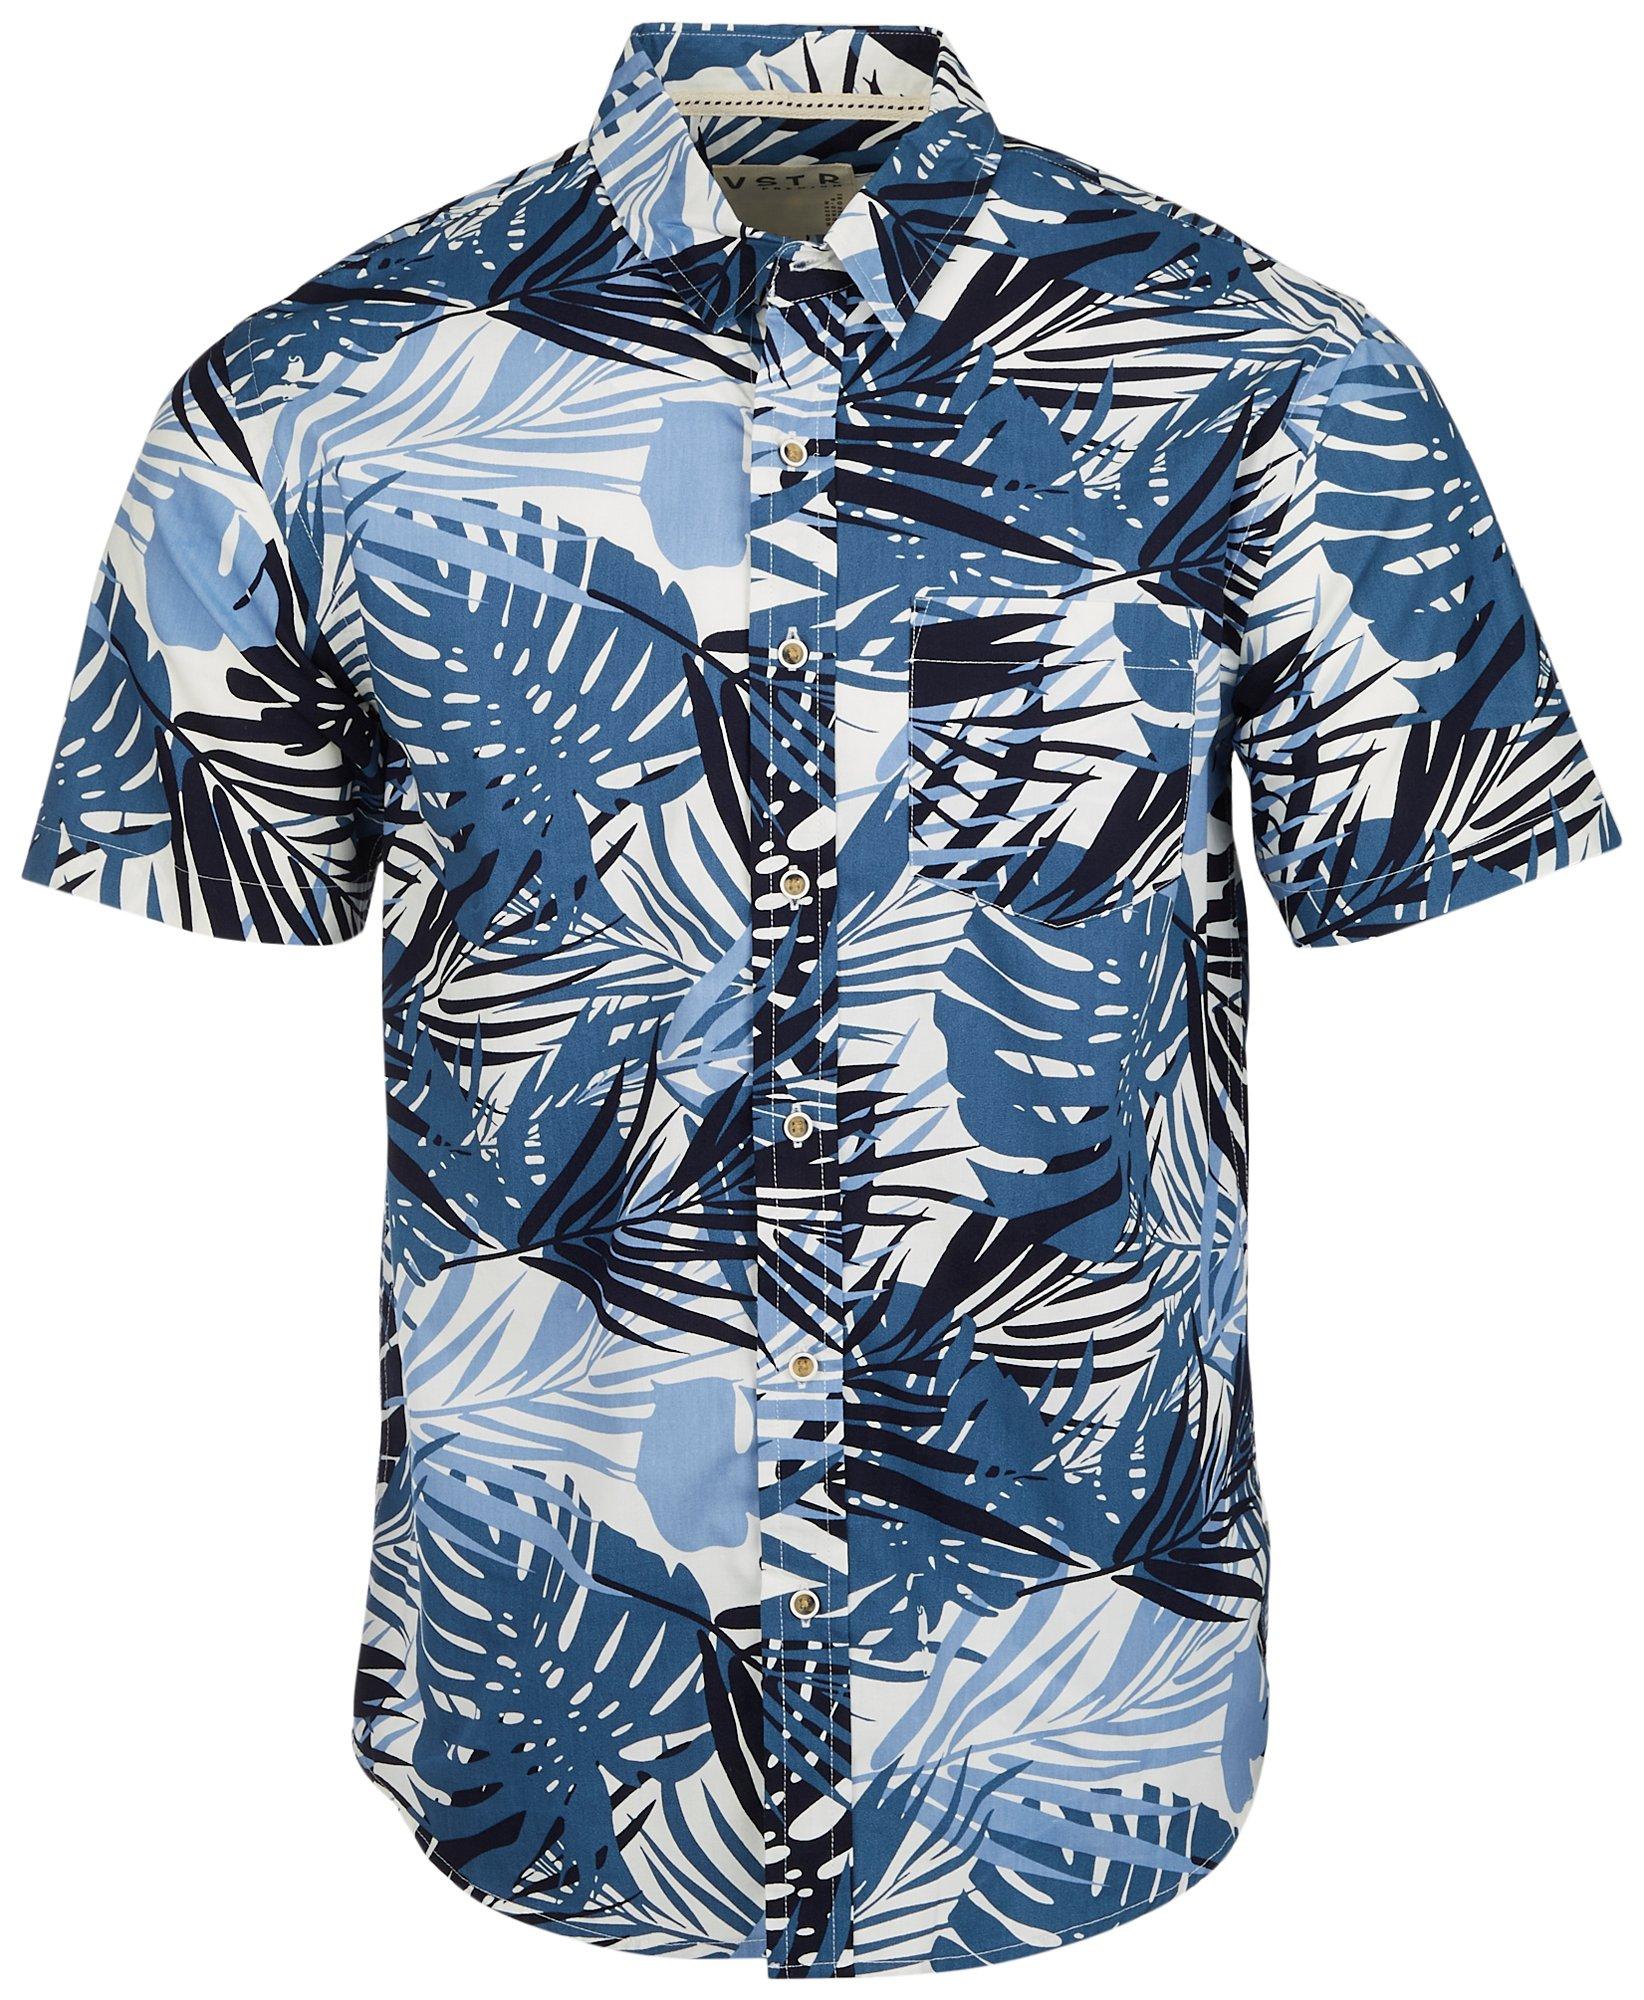 Visitor Mens Tropical Print Short Sleeve Shirt